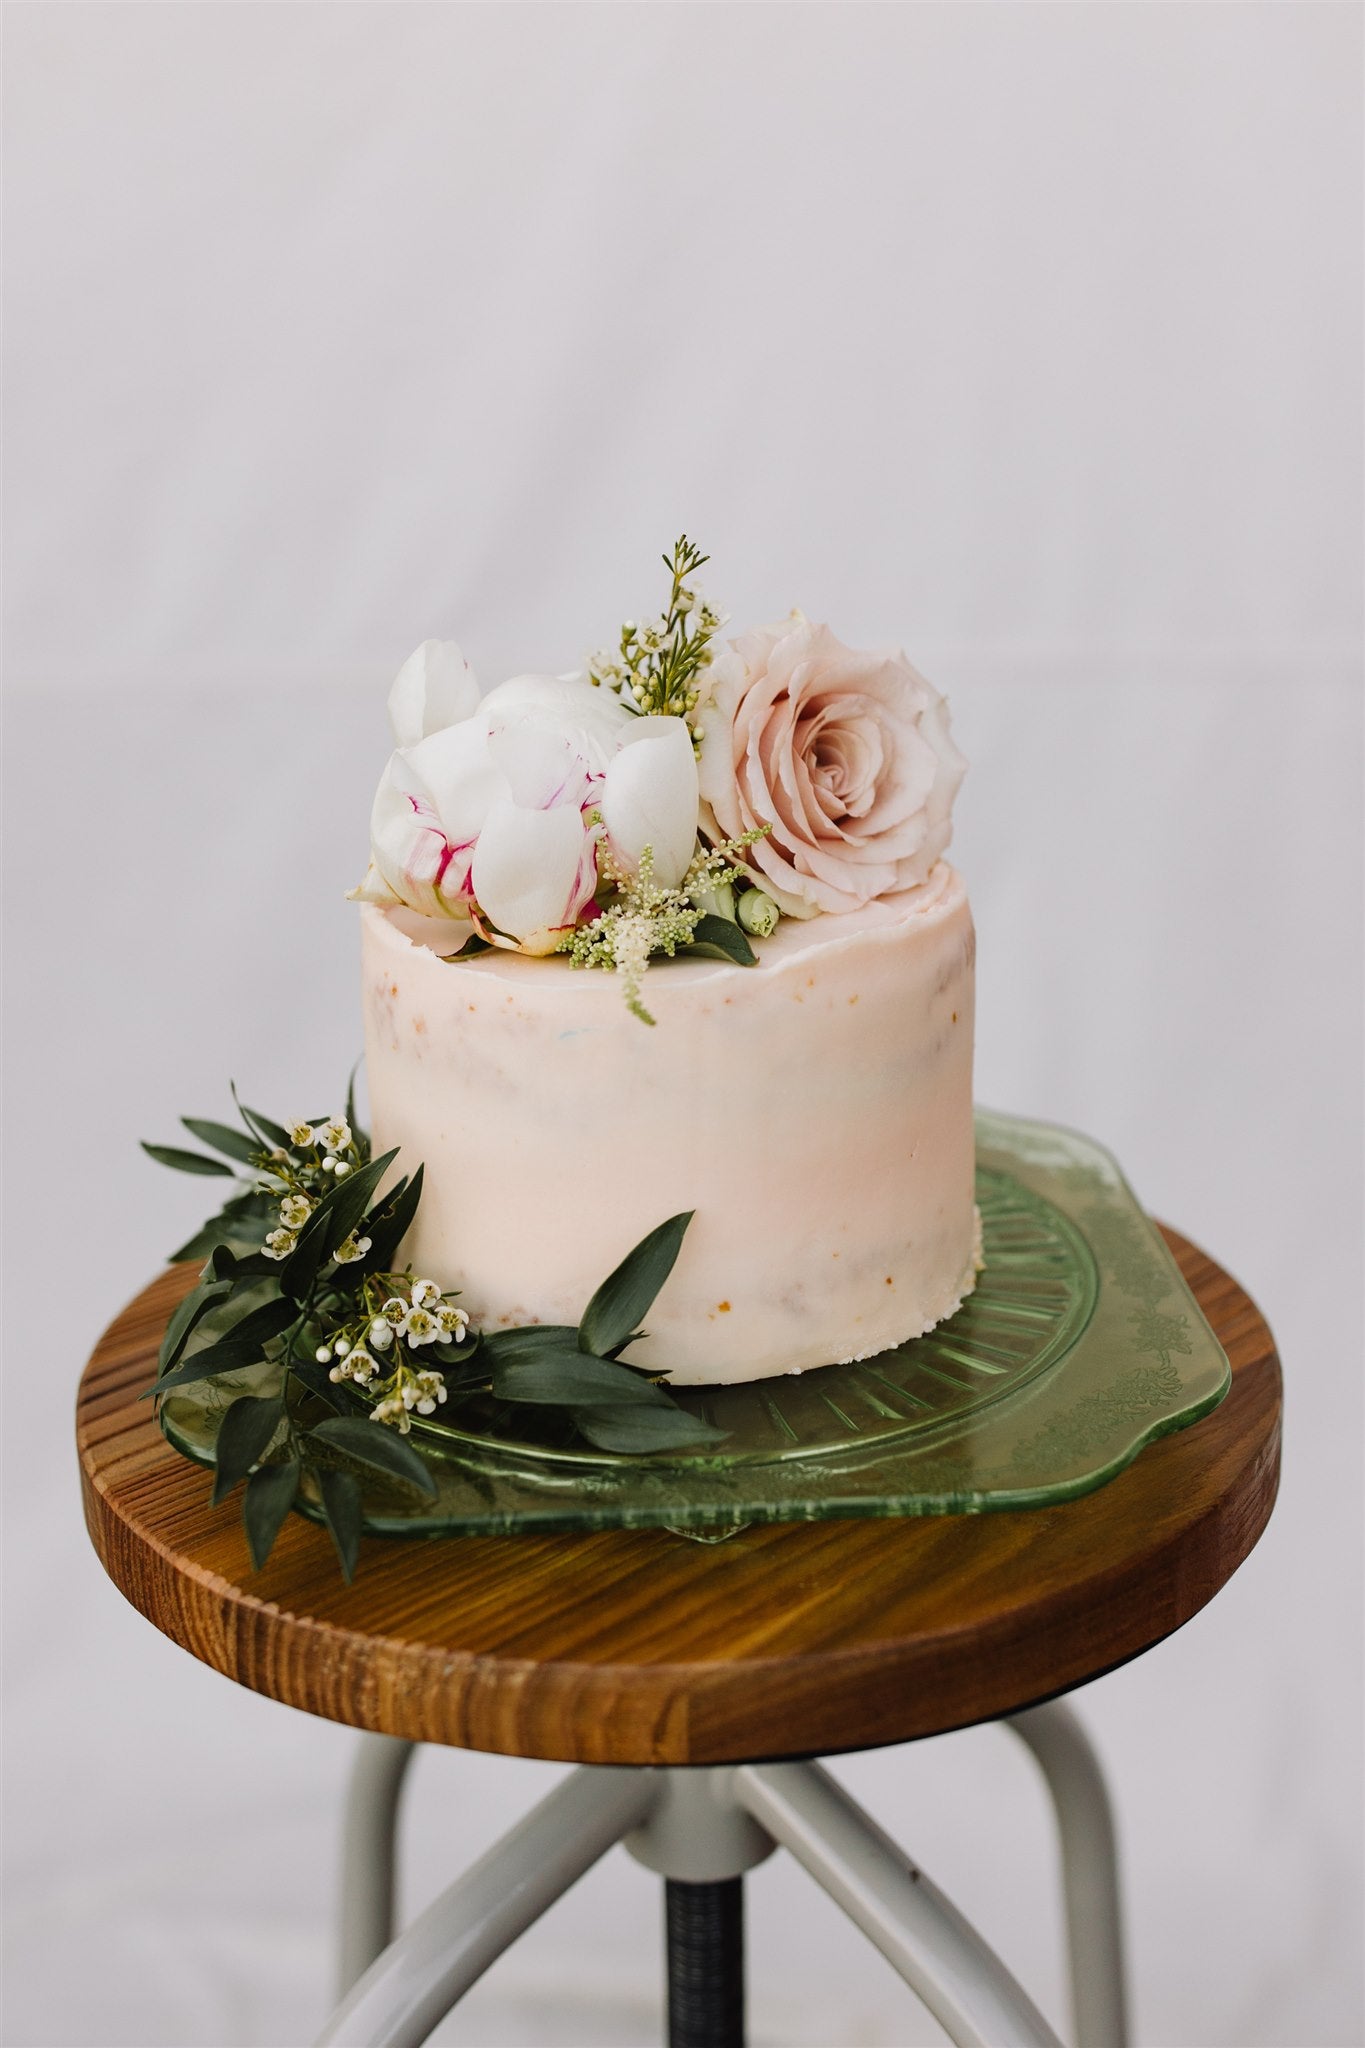 Cake Flowers + Photographer Extras